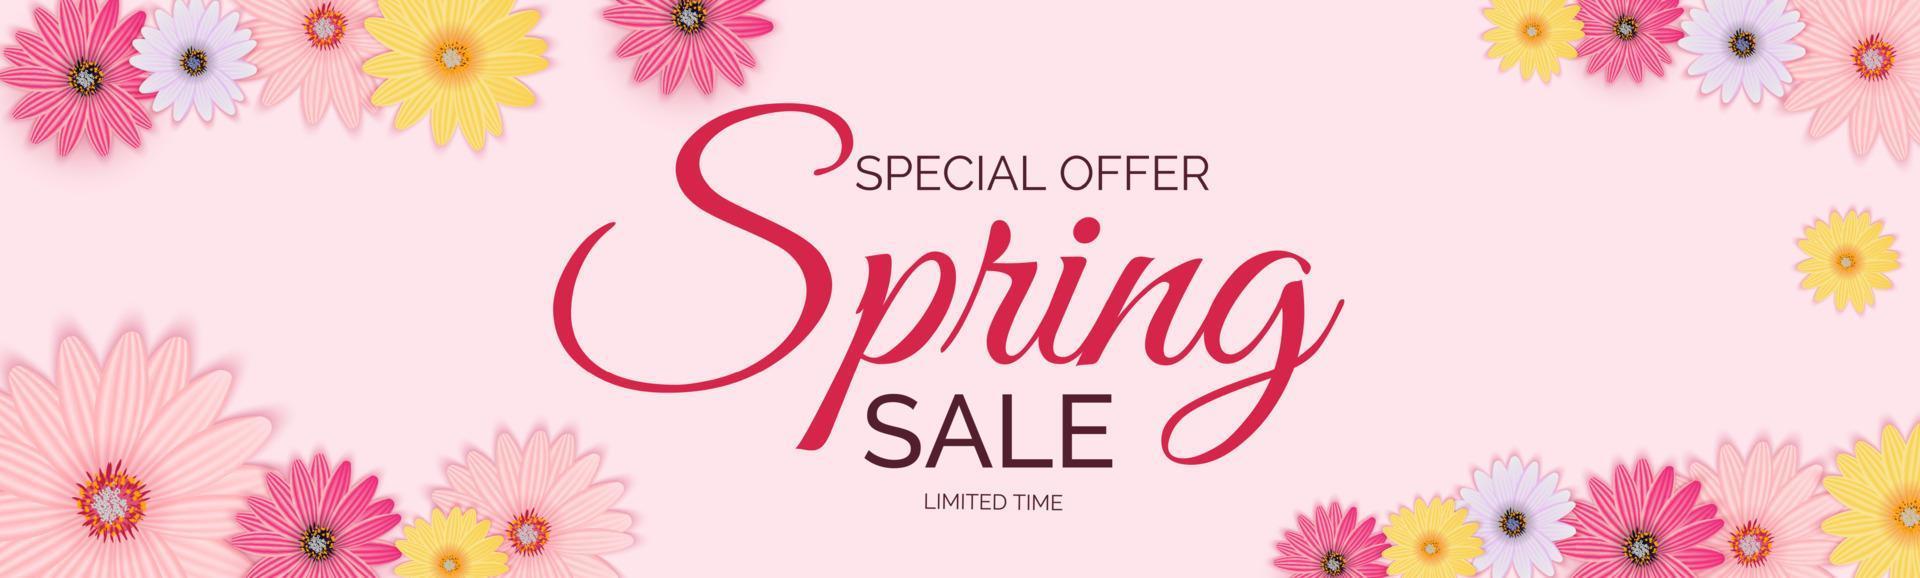 Promotion offer, card for spring sale season vector